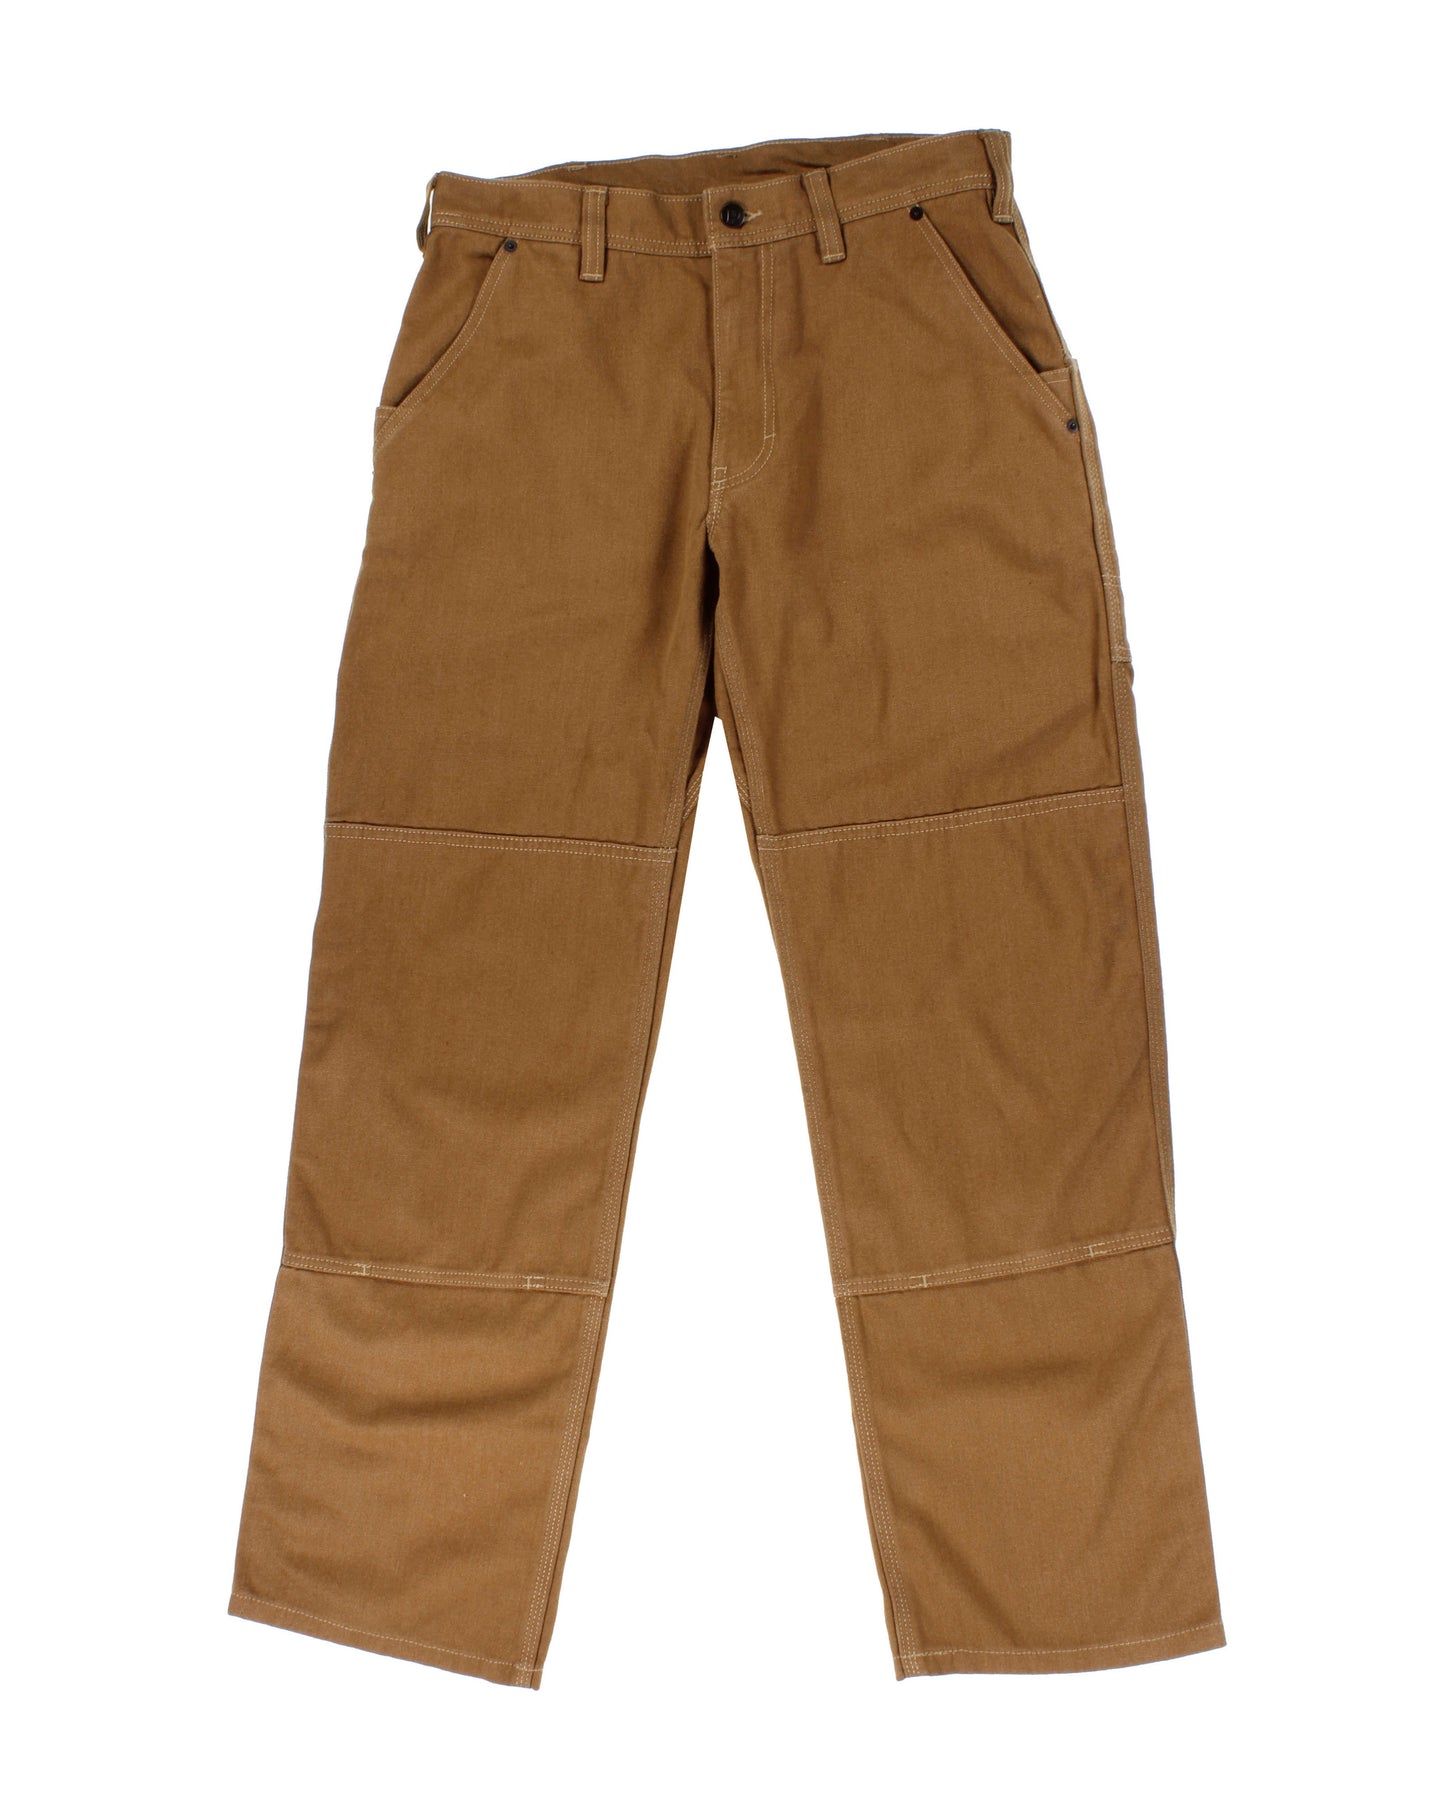 Men's Iron Forge Hemp® Canvas Double Knee Pants - Short